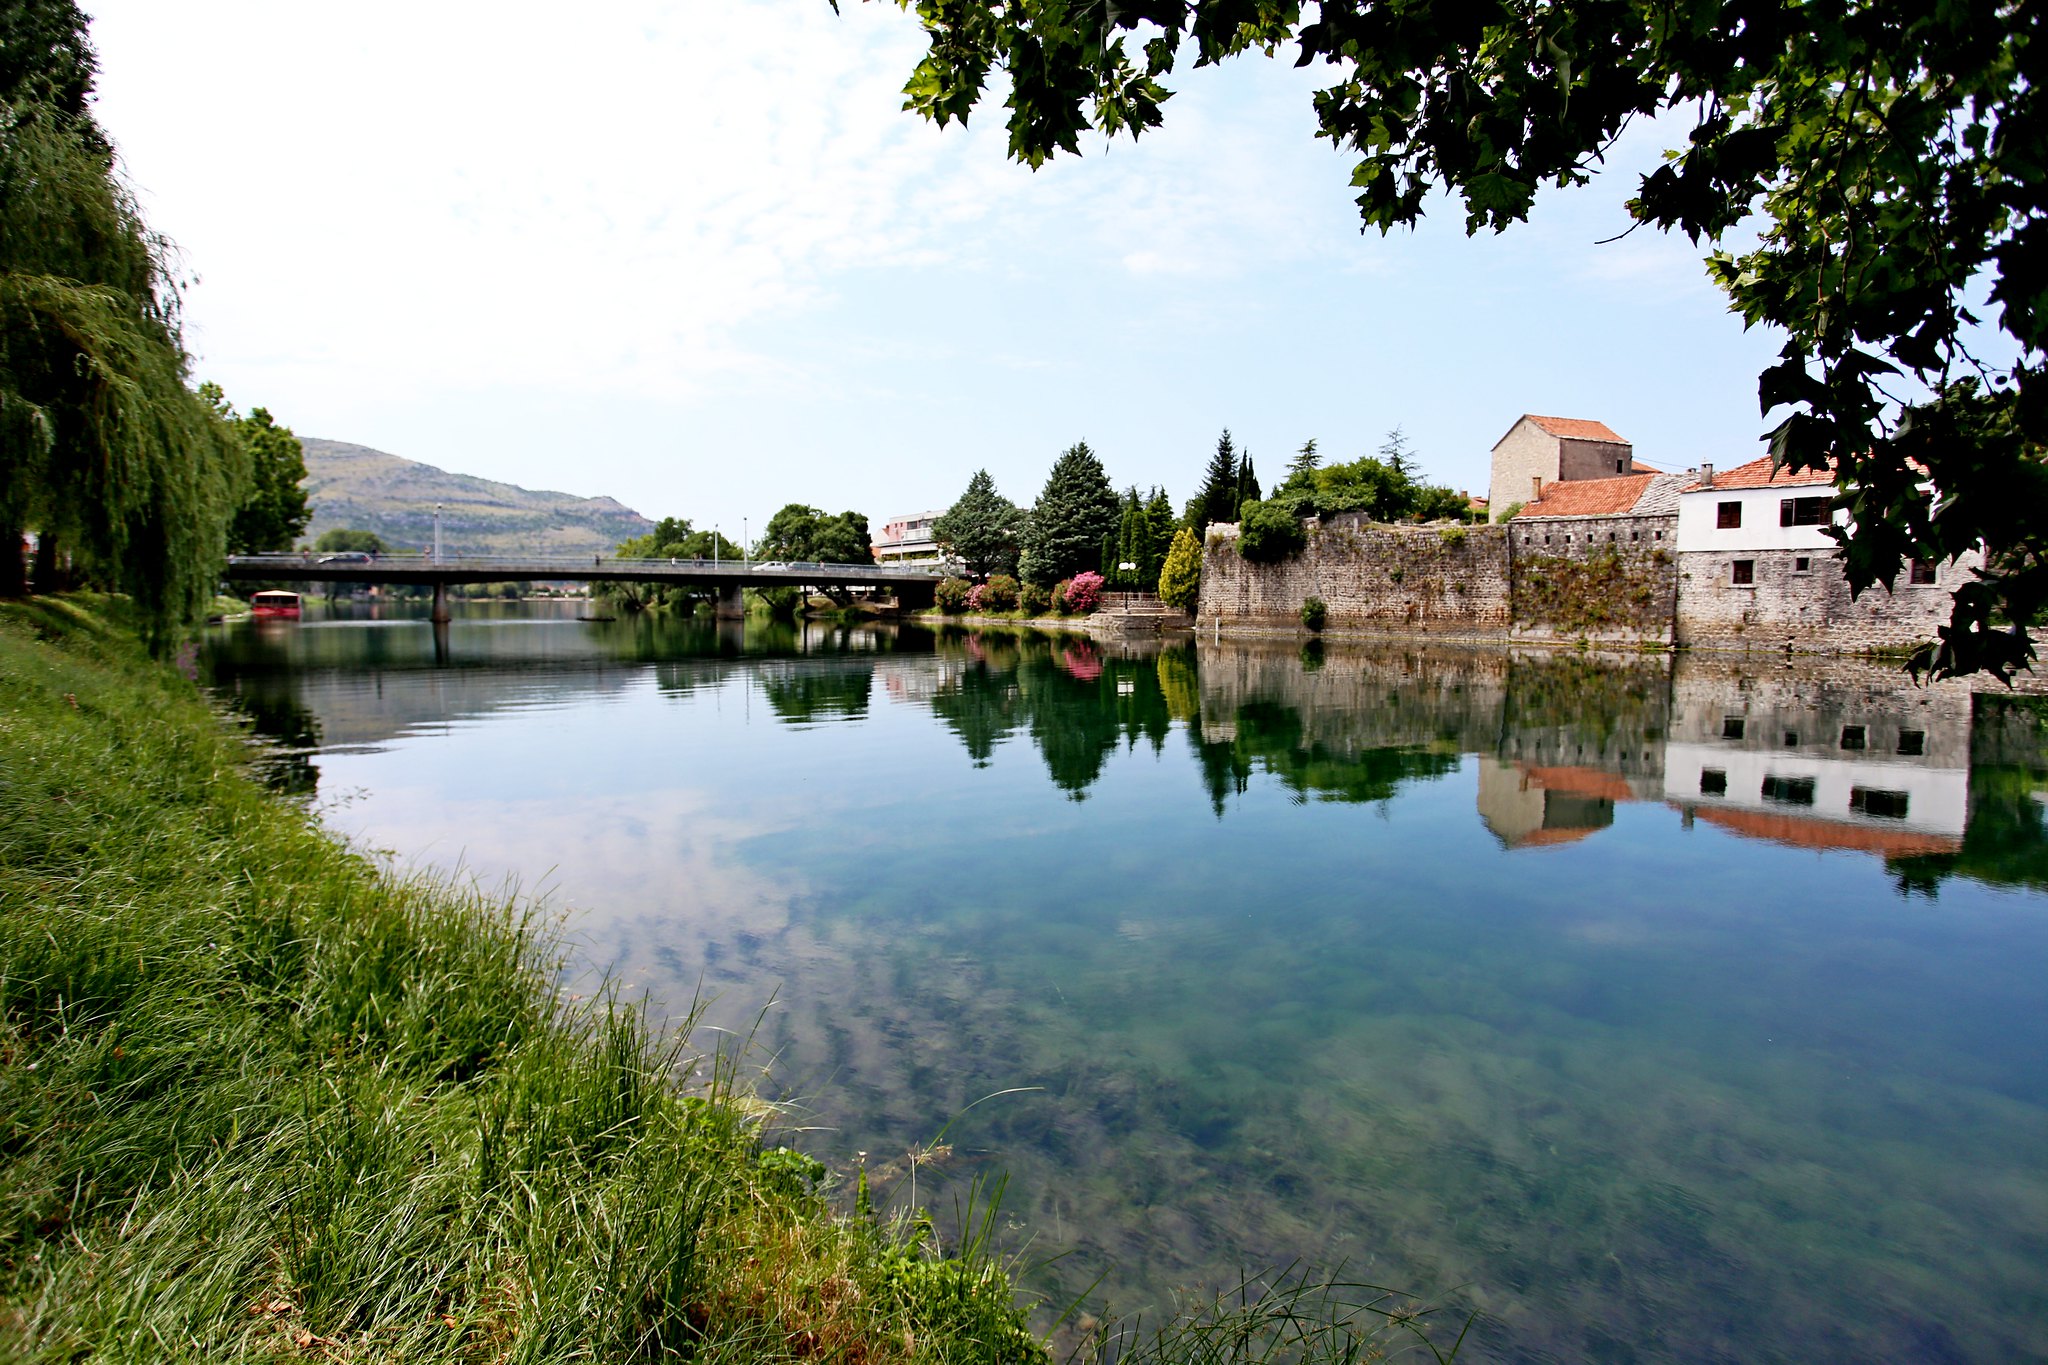 Things to do in Trebinje, Bosnia and Herzegovina